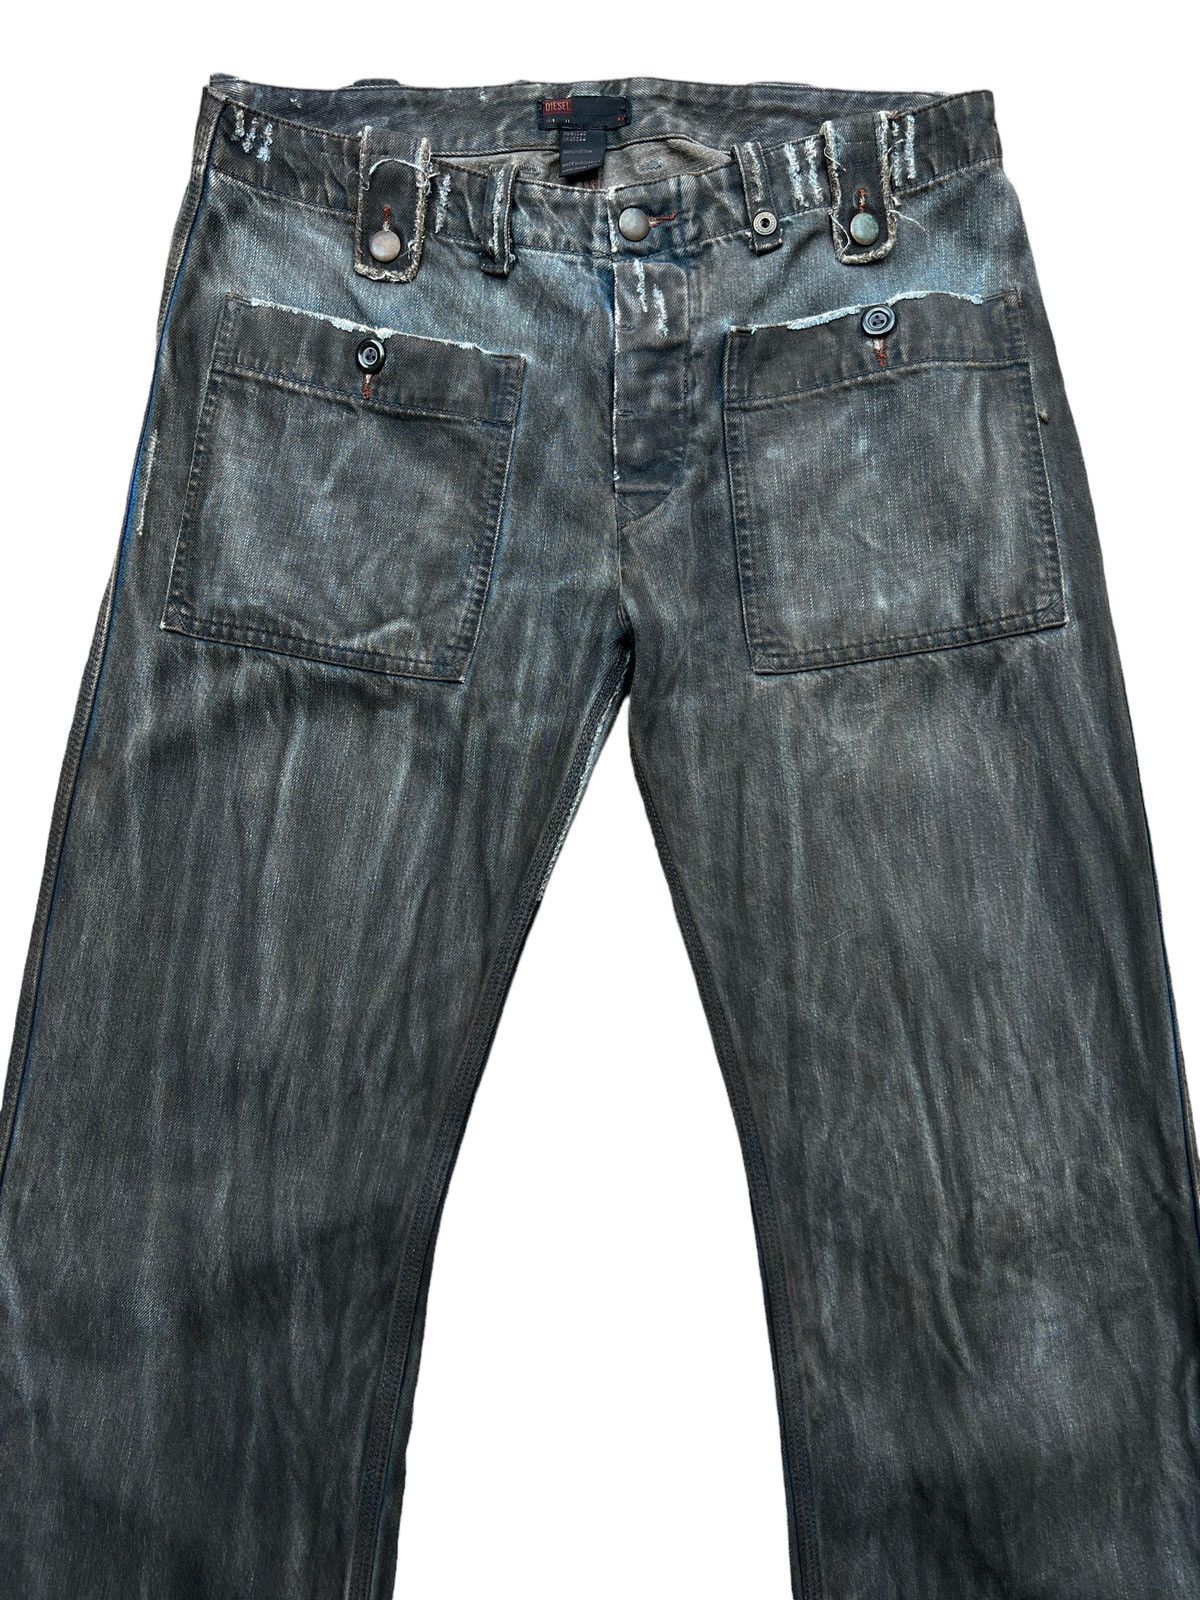 Rare🔥Diesel MultiPocket Distressed Baggy Bondage Jeans 34x34 - 4